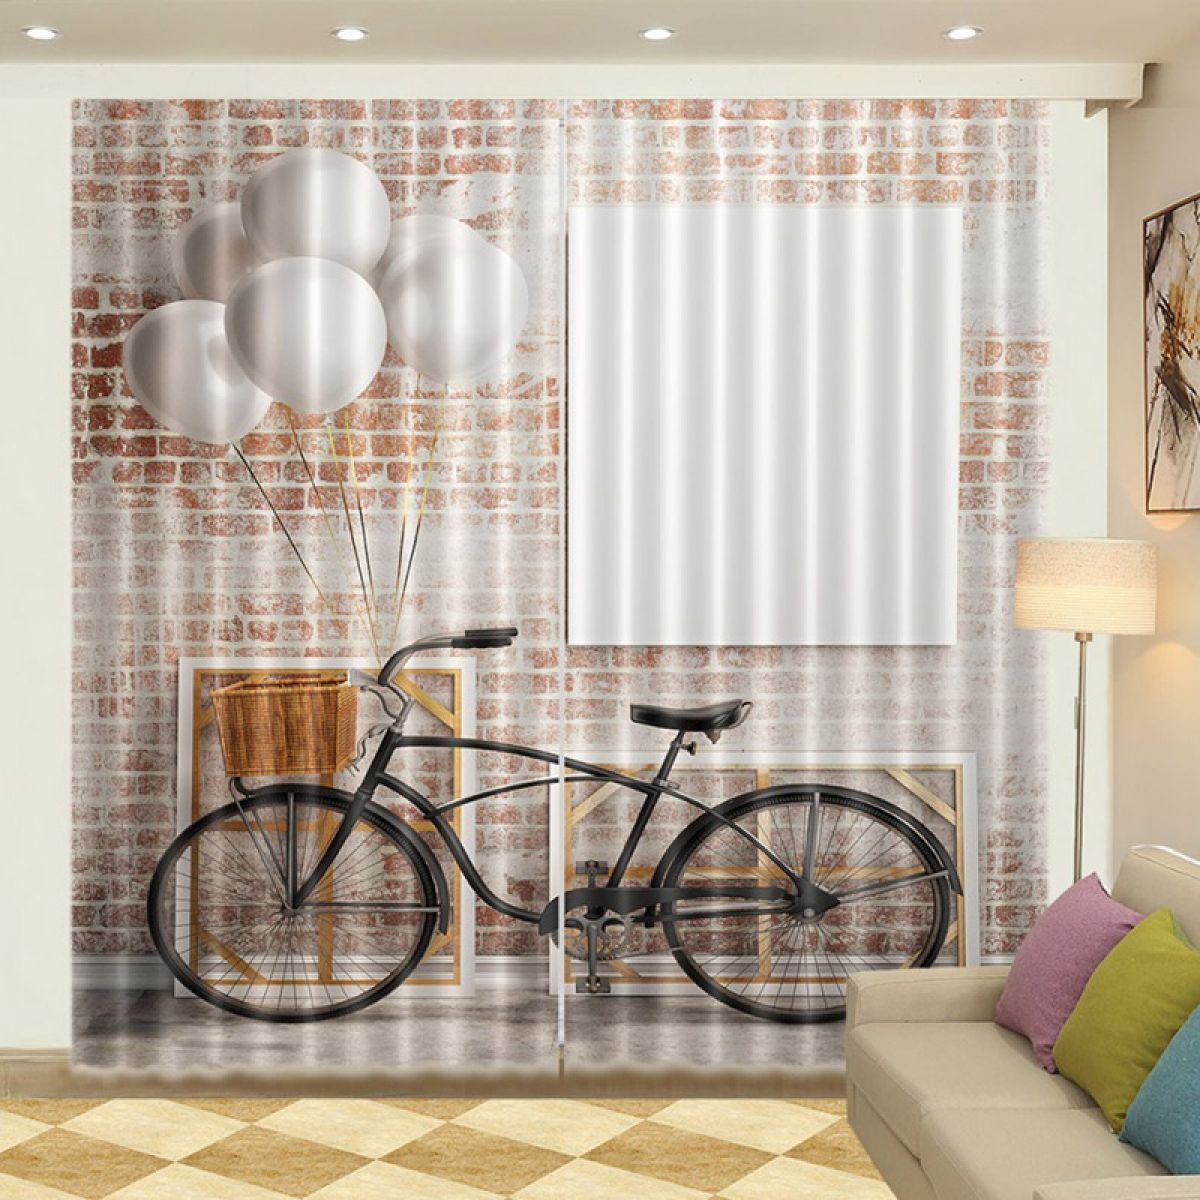 Bike And Balloon Printed Window Curtain Home Decor